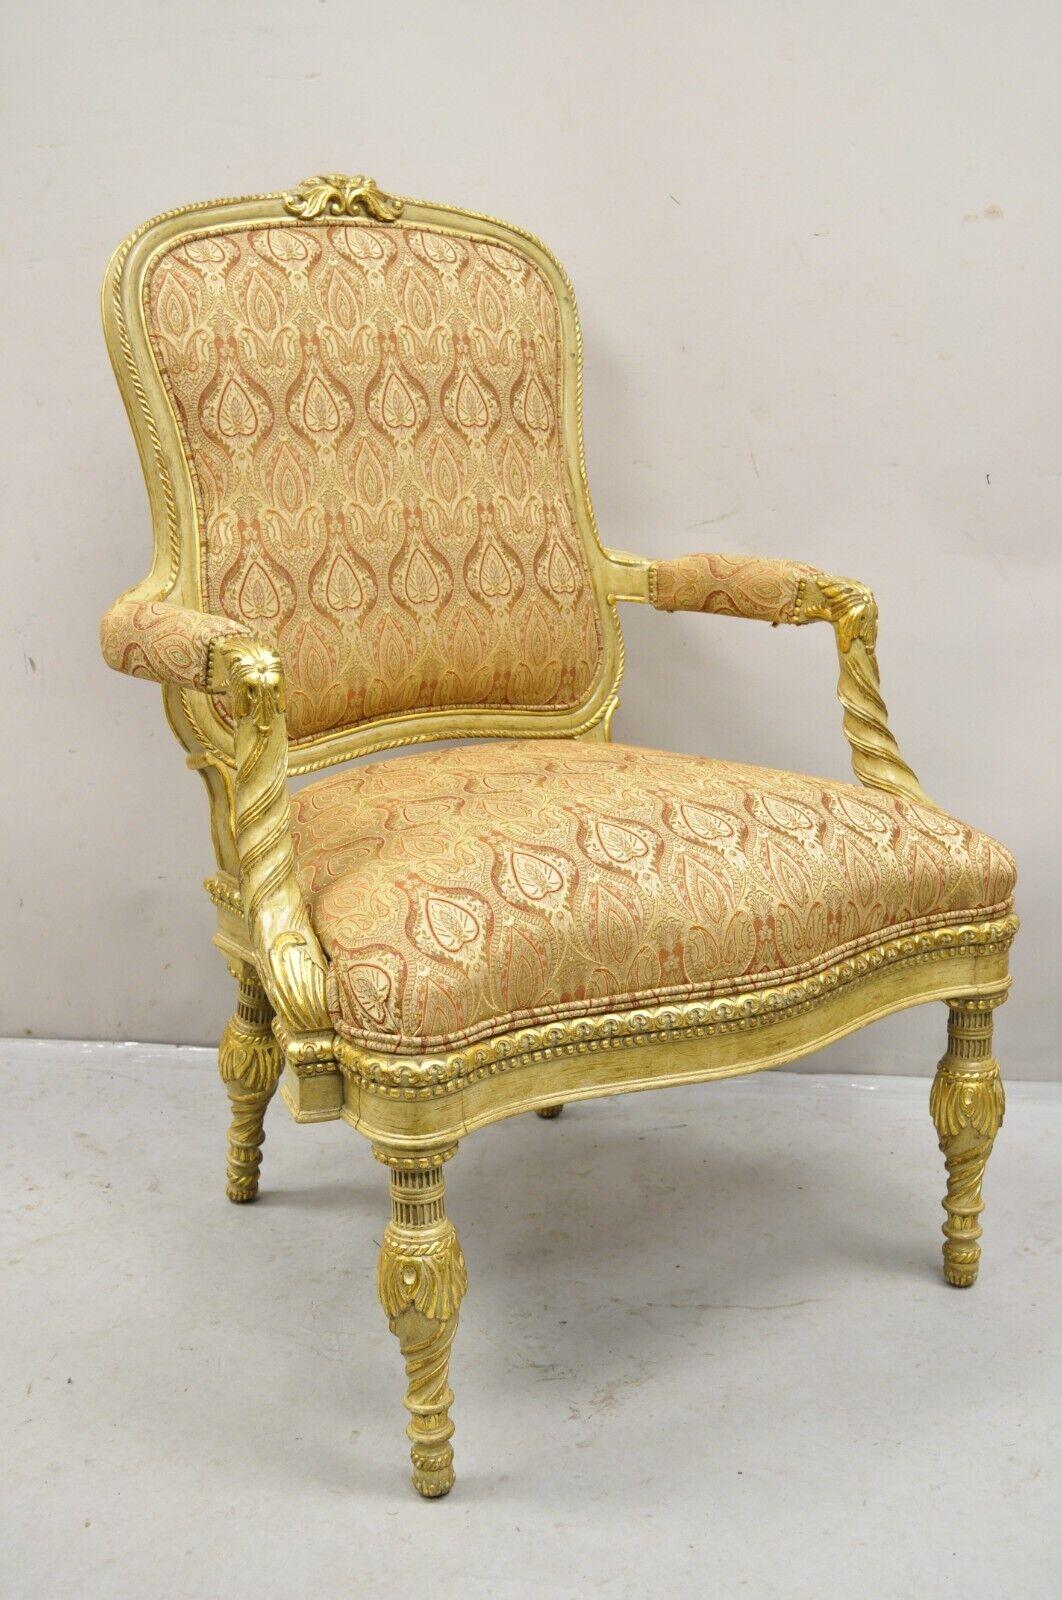 Oscar de la Renta Home by Century Furniture Italian Neoclassical Style Gold Gilt Cream Painted Armchair. Circa Late 20th Century
Measurements: 44